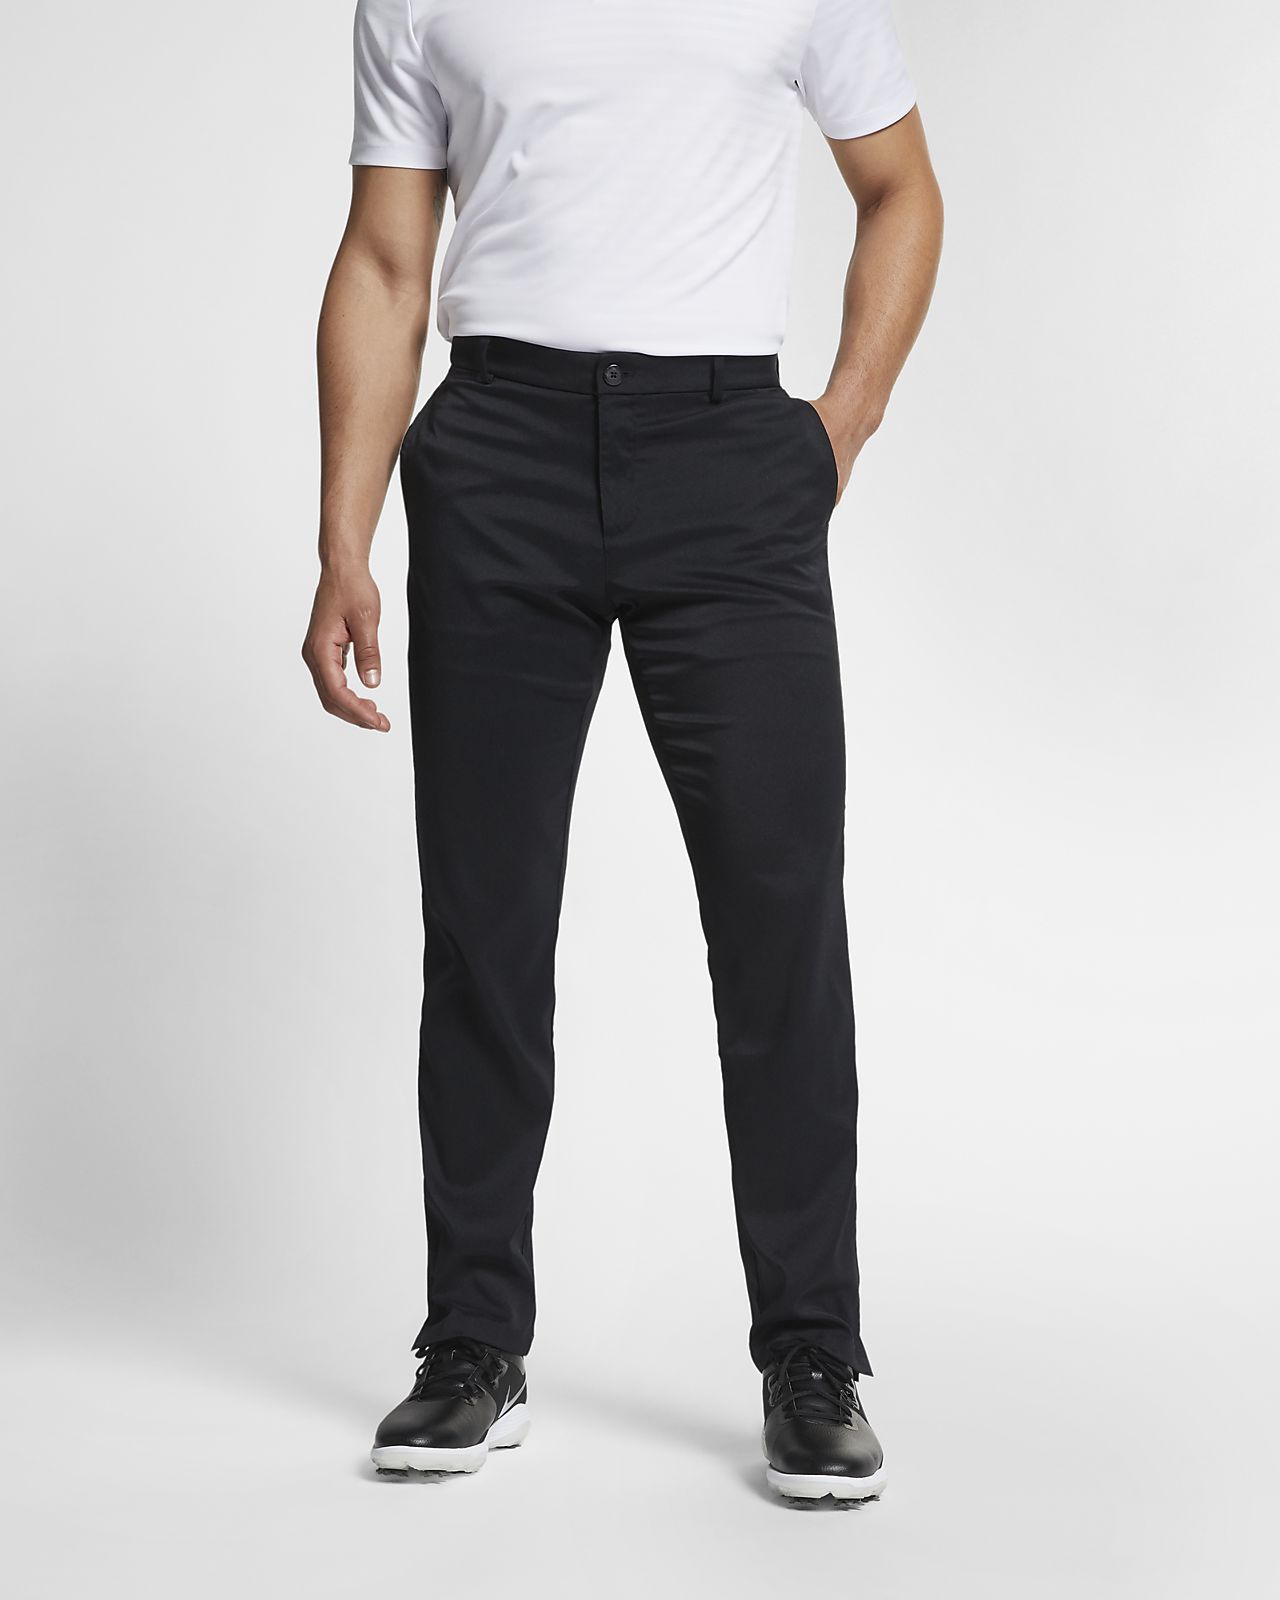 Nike | Dri-FIT Vapor Men's Slim-Fit Golf Pants | Golf Trousers |  SportsDirect.com